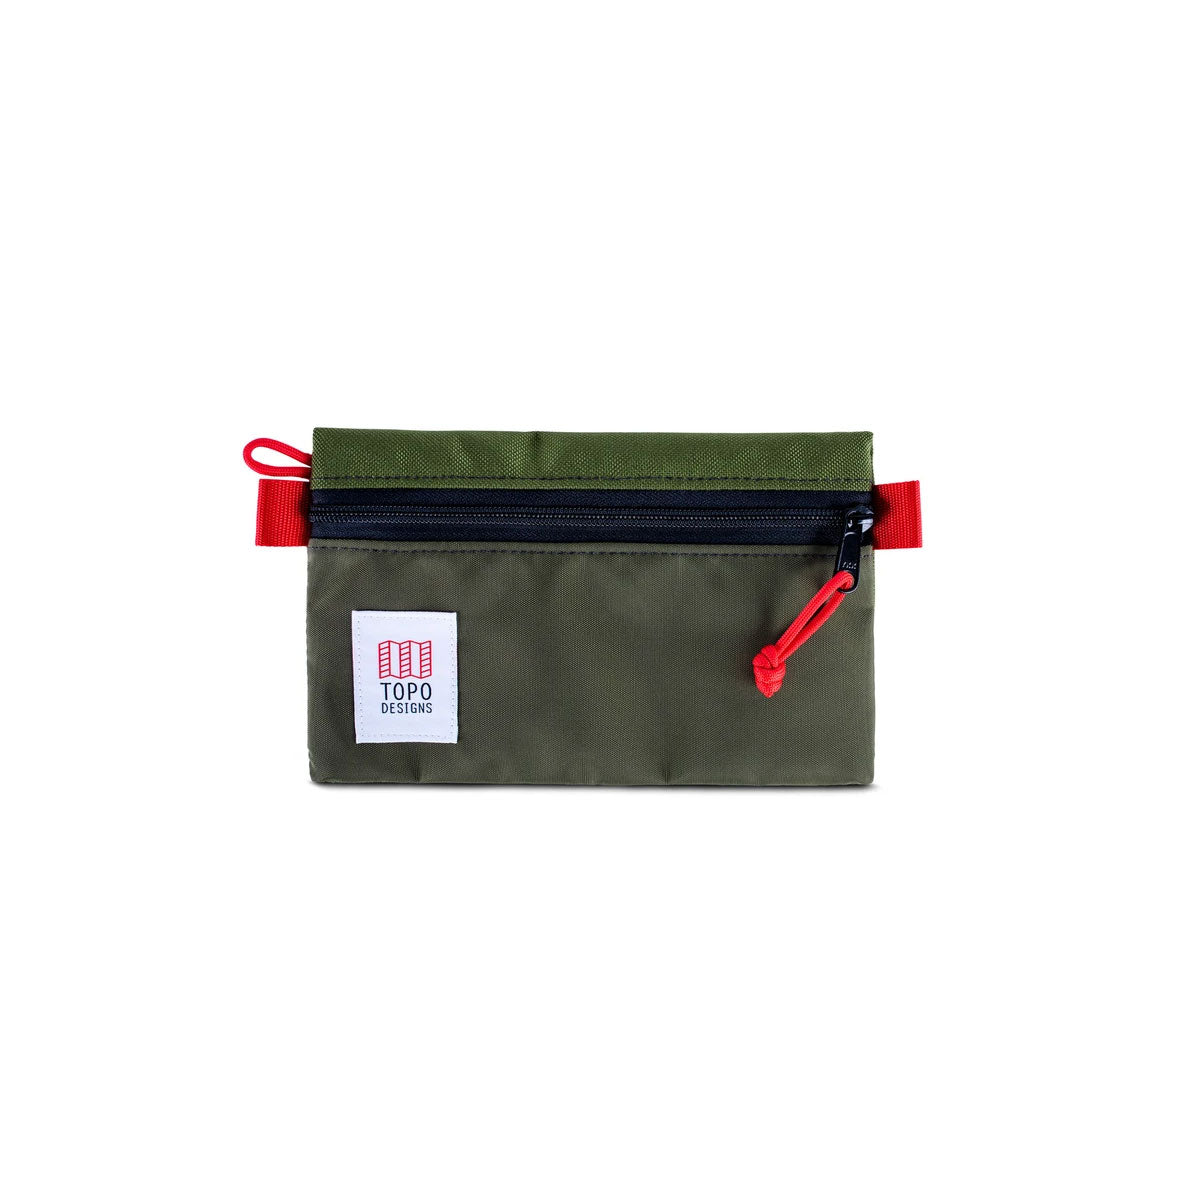 Topo Designs : Accessory Bag : Olive/Olive